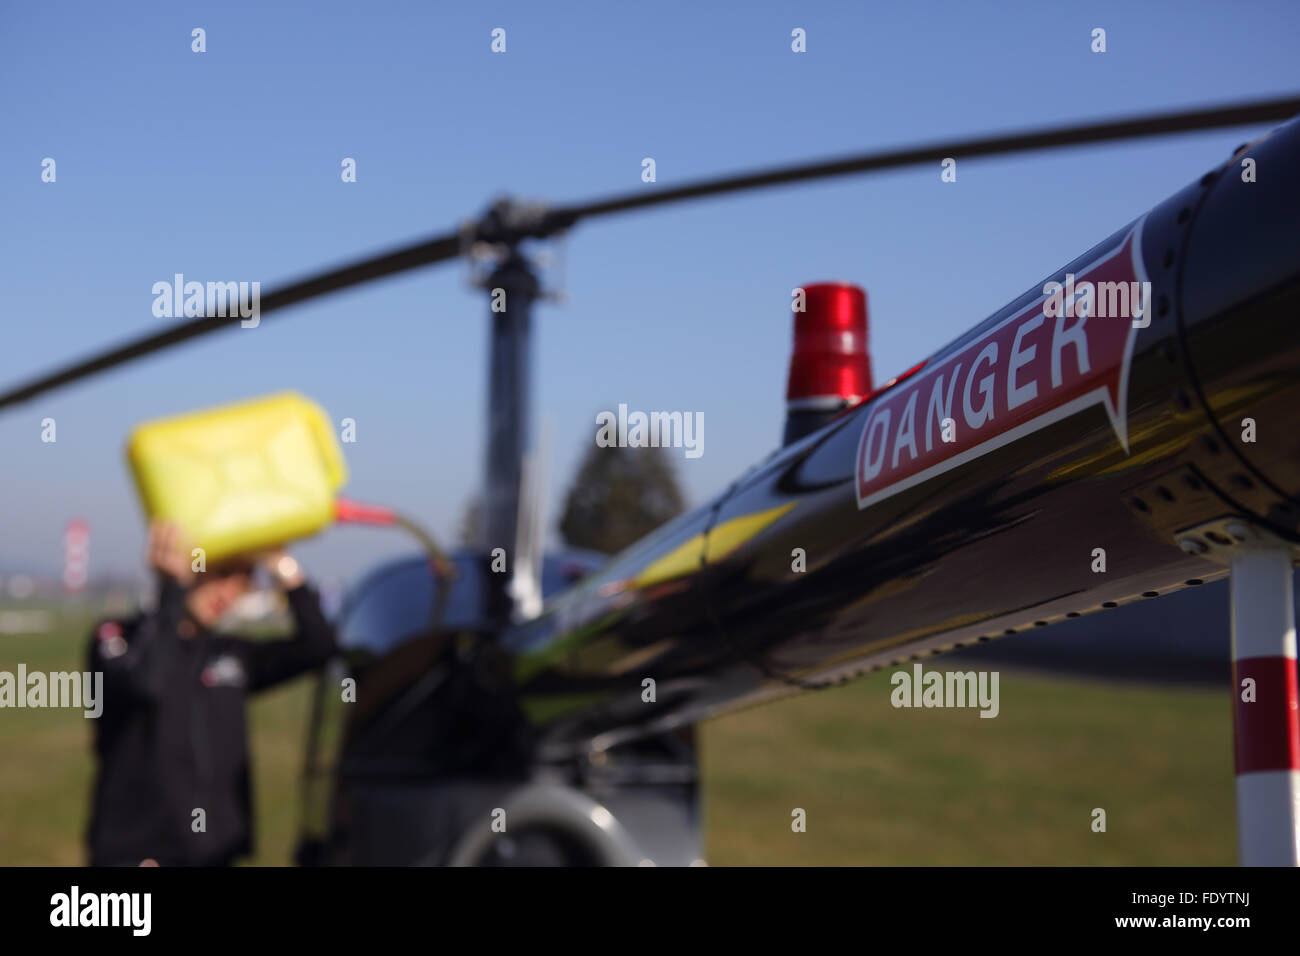 Beromuenster, Switzerland, helicopter is refueled Stock Photo